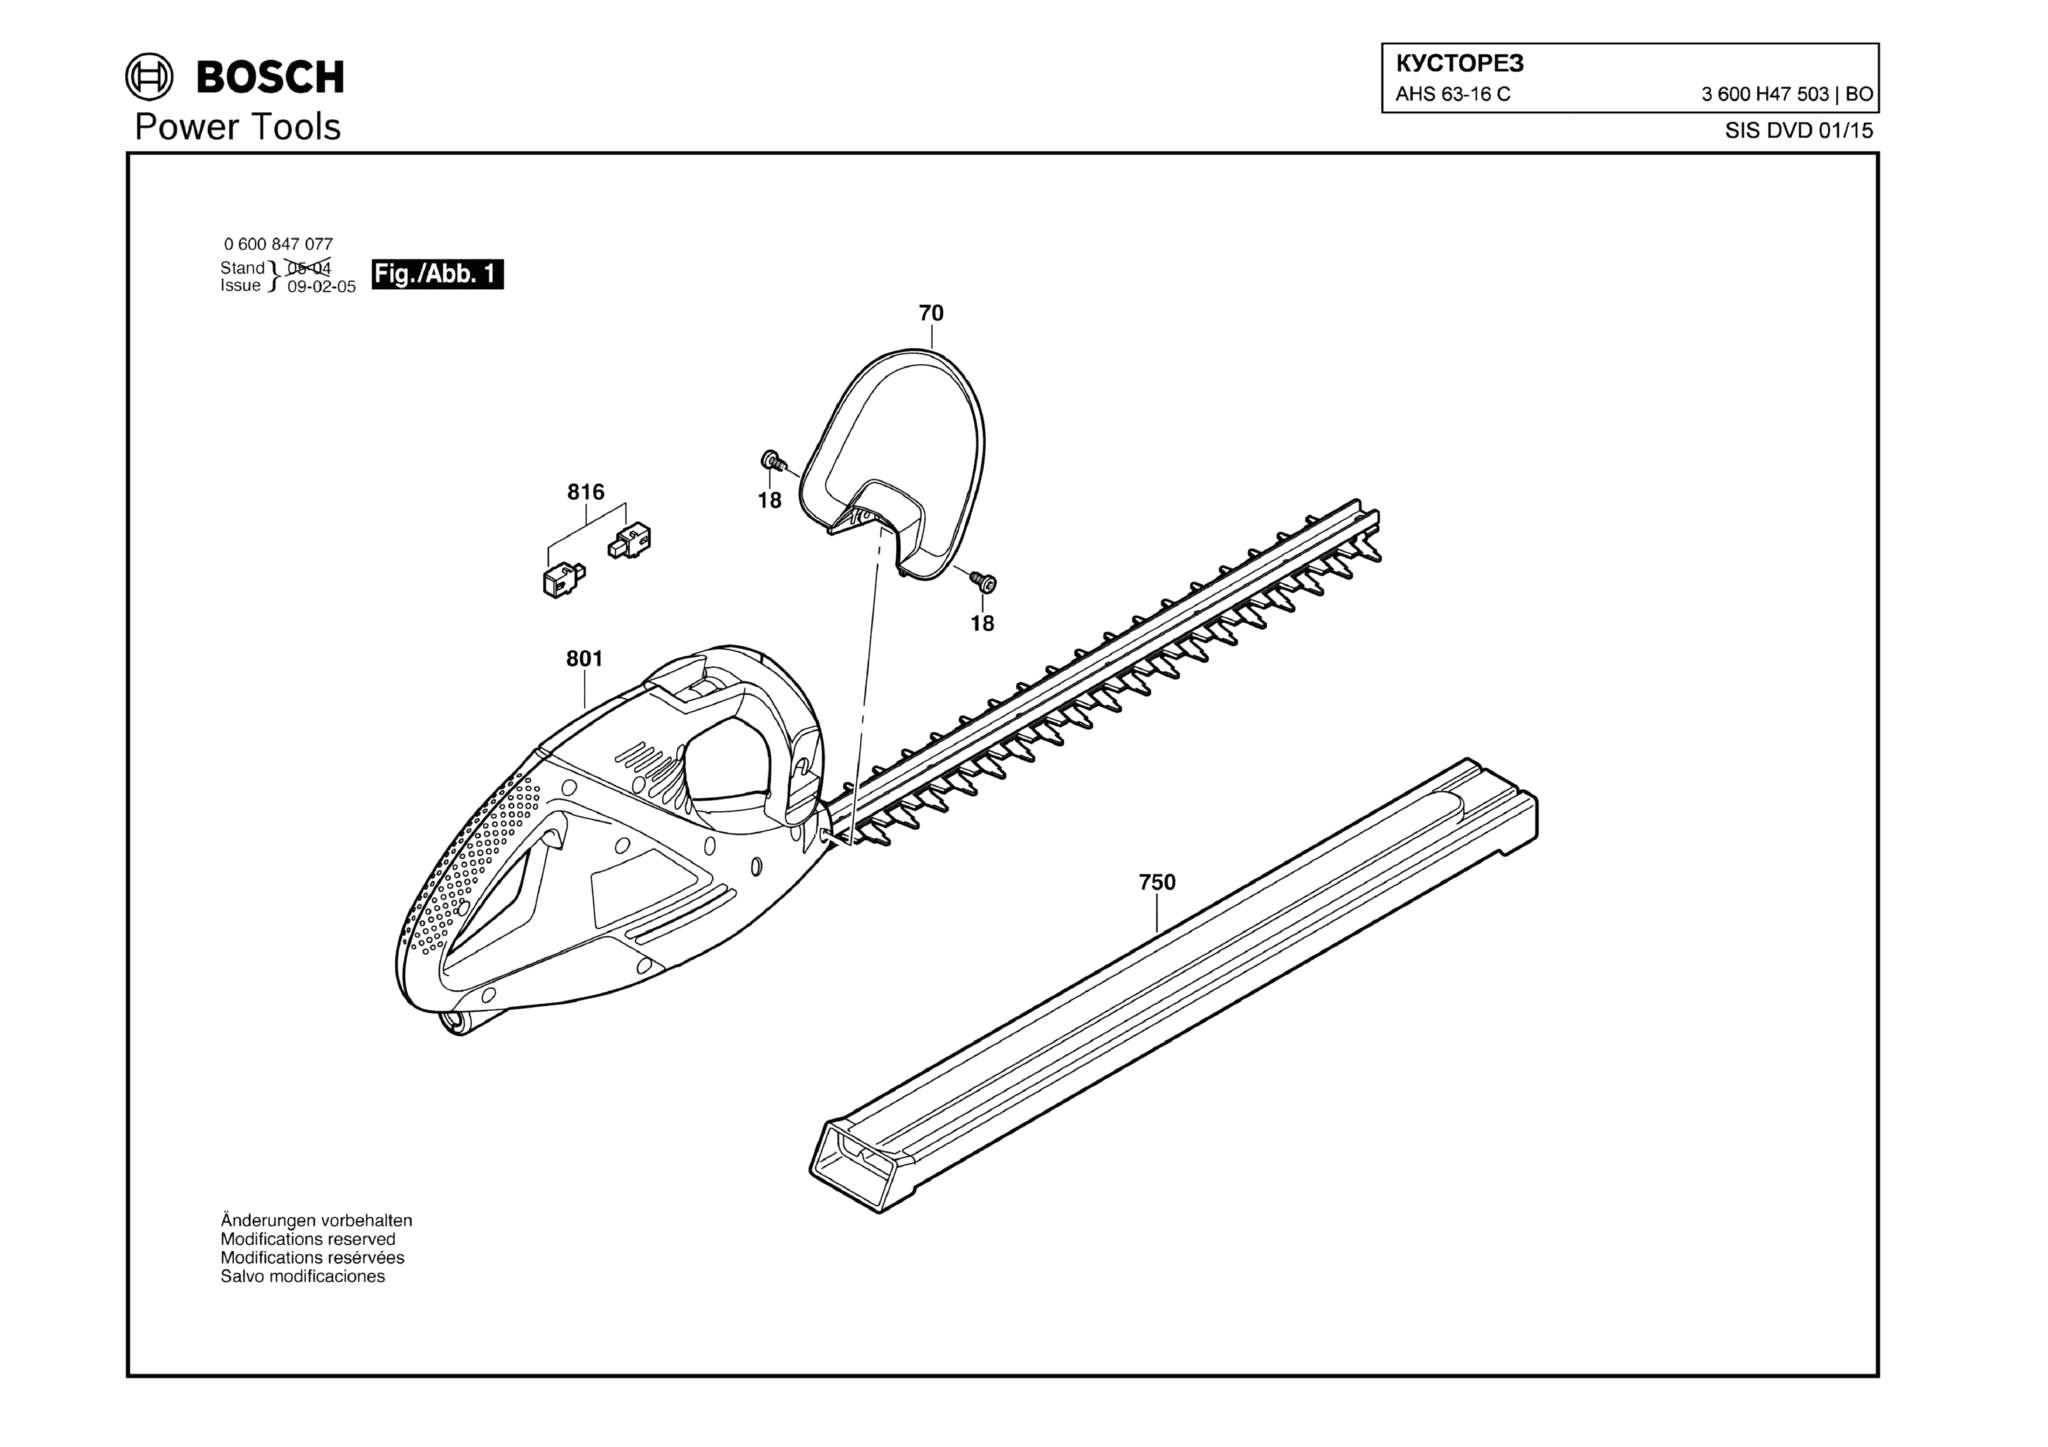 Запчасти, схема и деталировка Bosch AHS 63-16 C (ТИП 3600H47503)